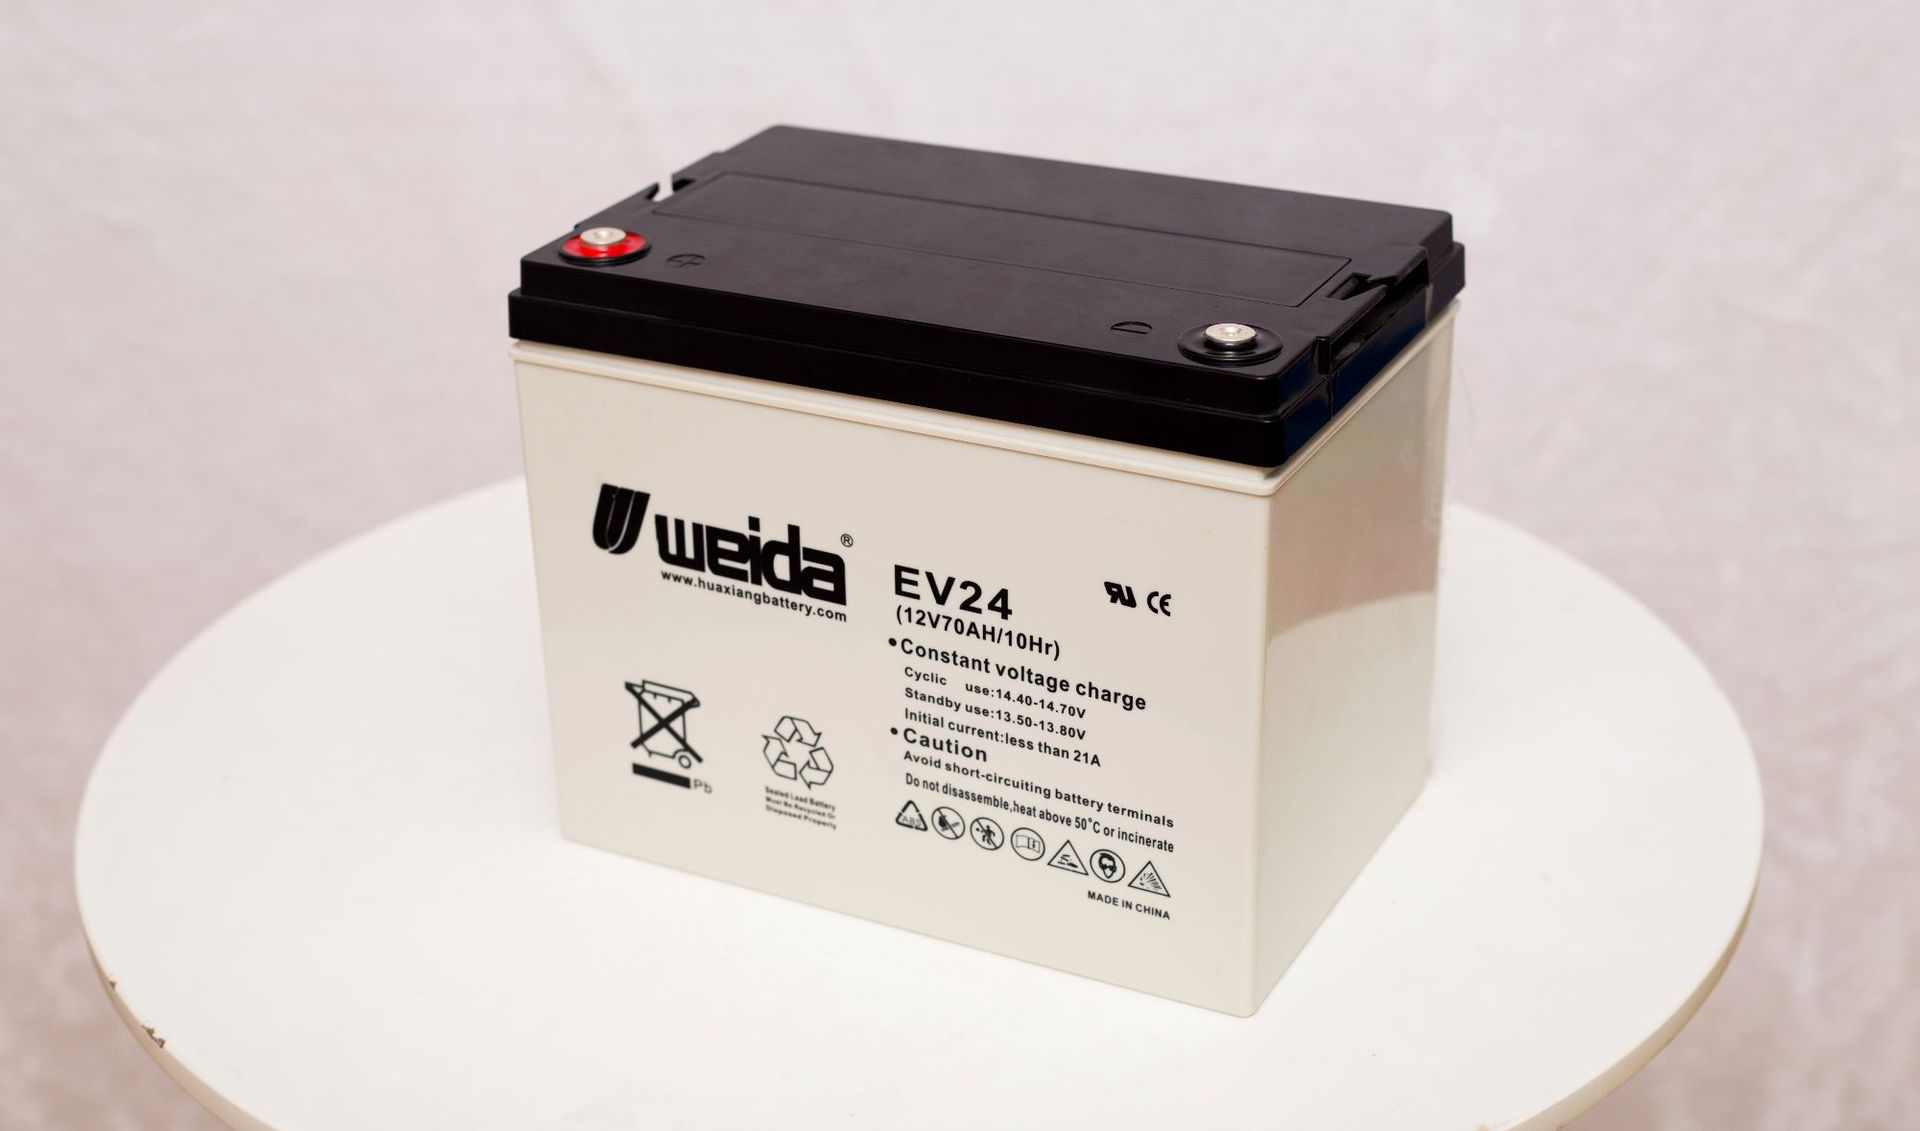 WEIDA EV系列电池多种规格可选 定制铅酸蓄电池 储能电池